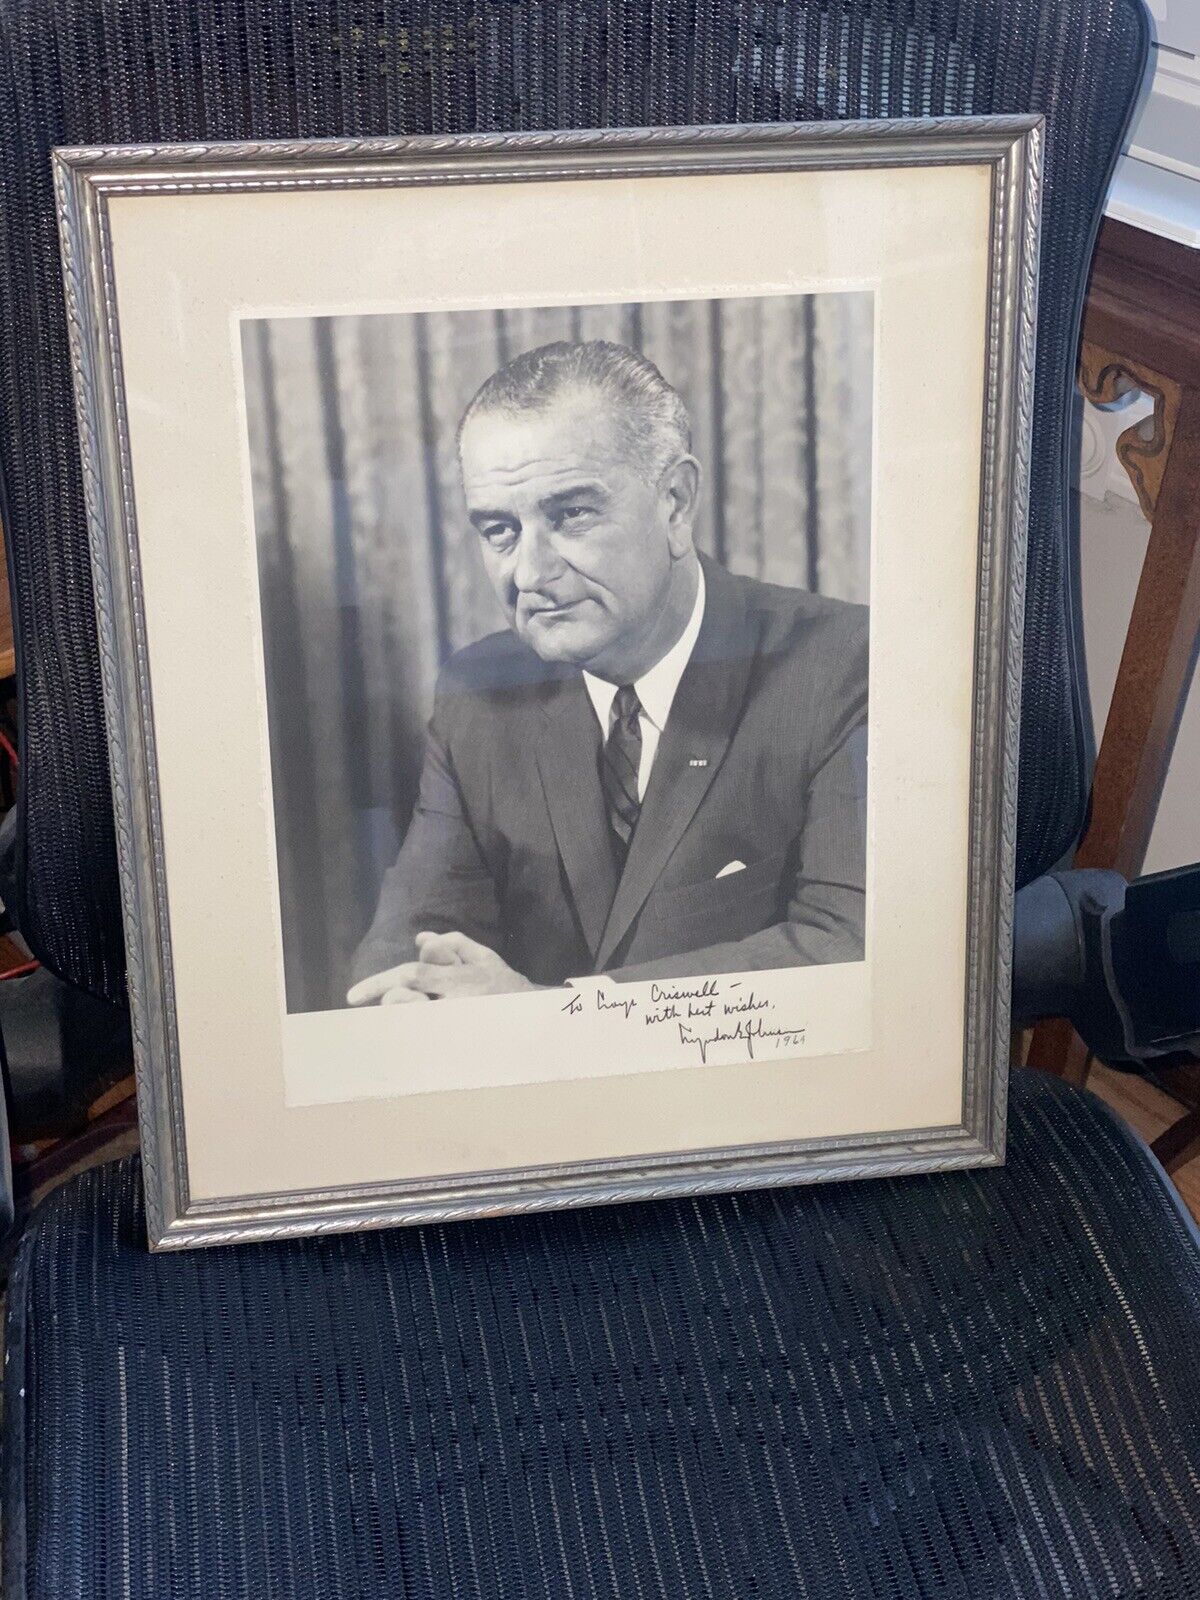 LYNDON B. JOHNSON LARGE SIGNED INSCRIBED FRAMED PHOTOGRAPH 1964 PRESIDENT